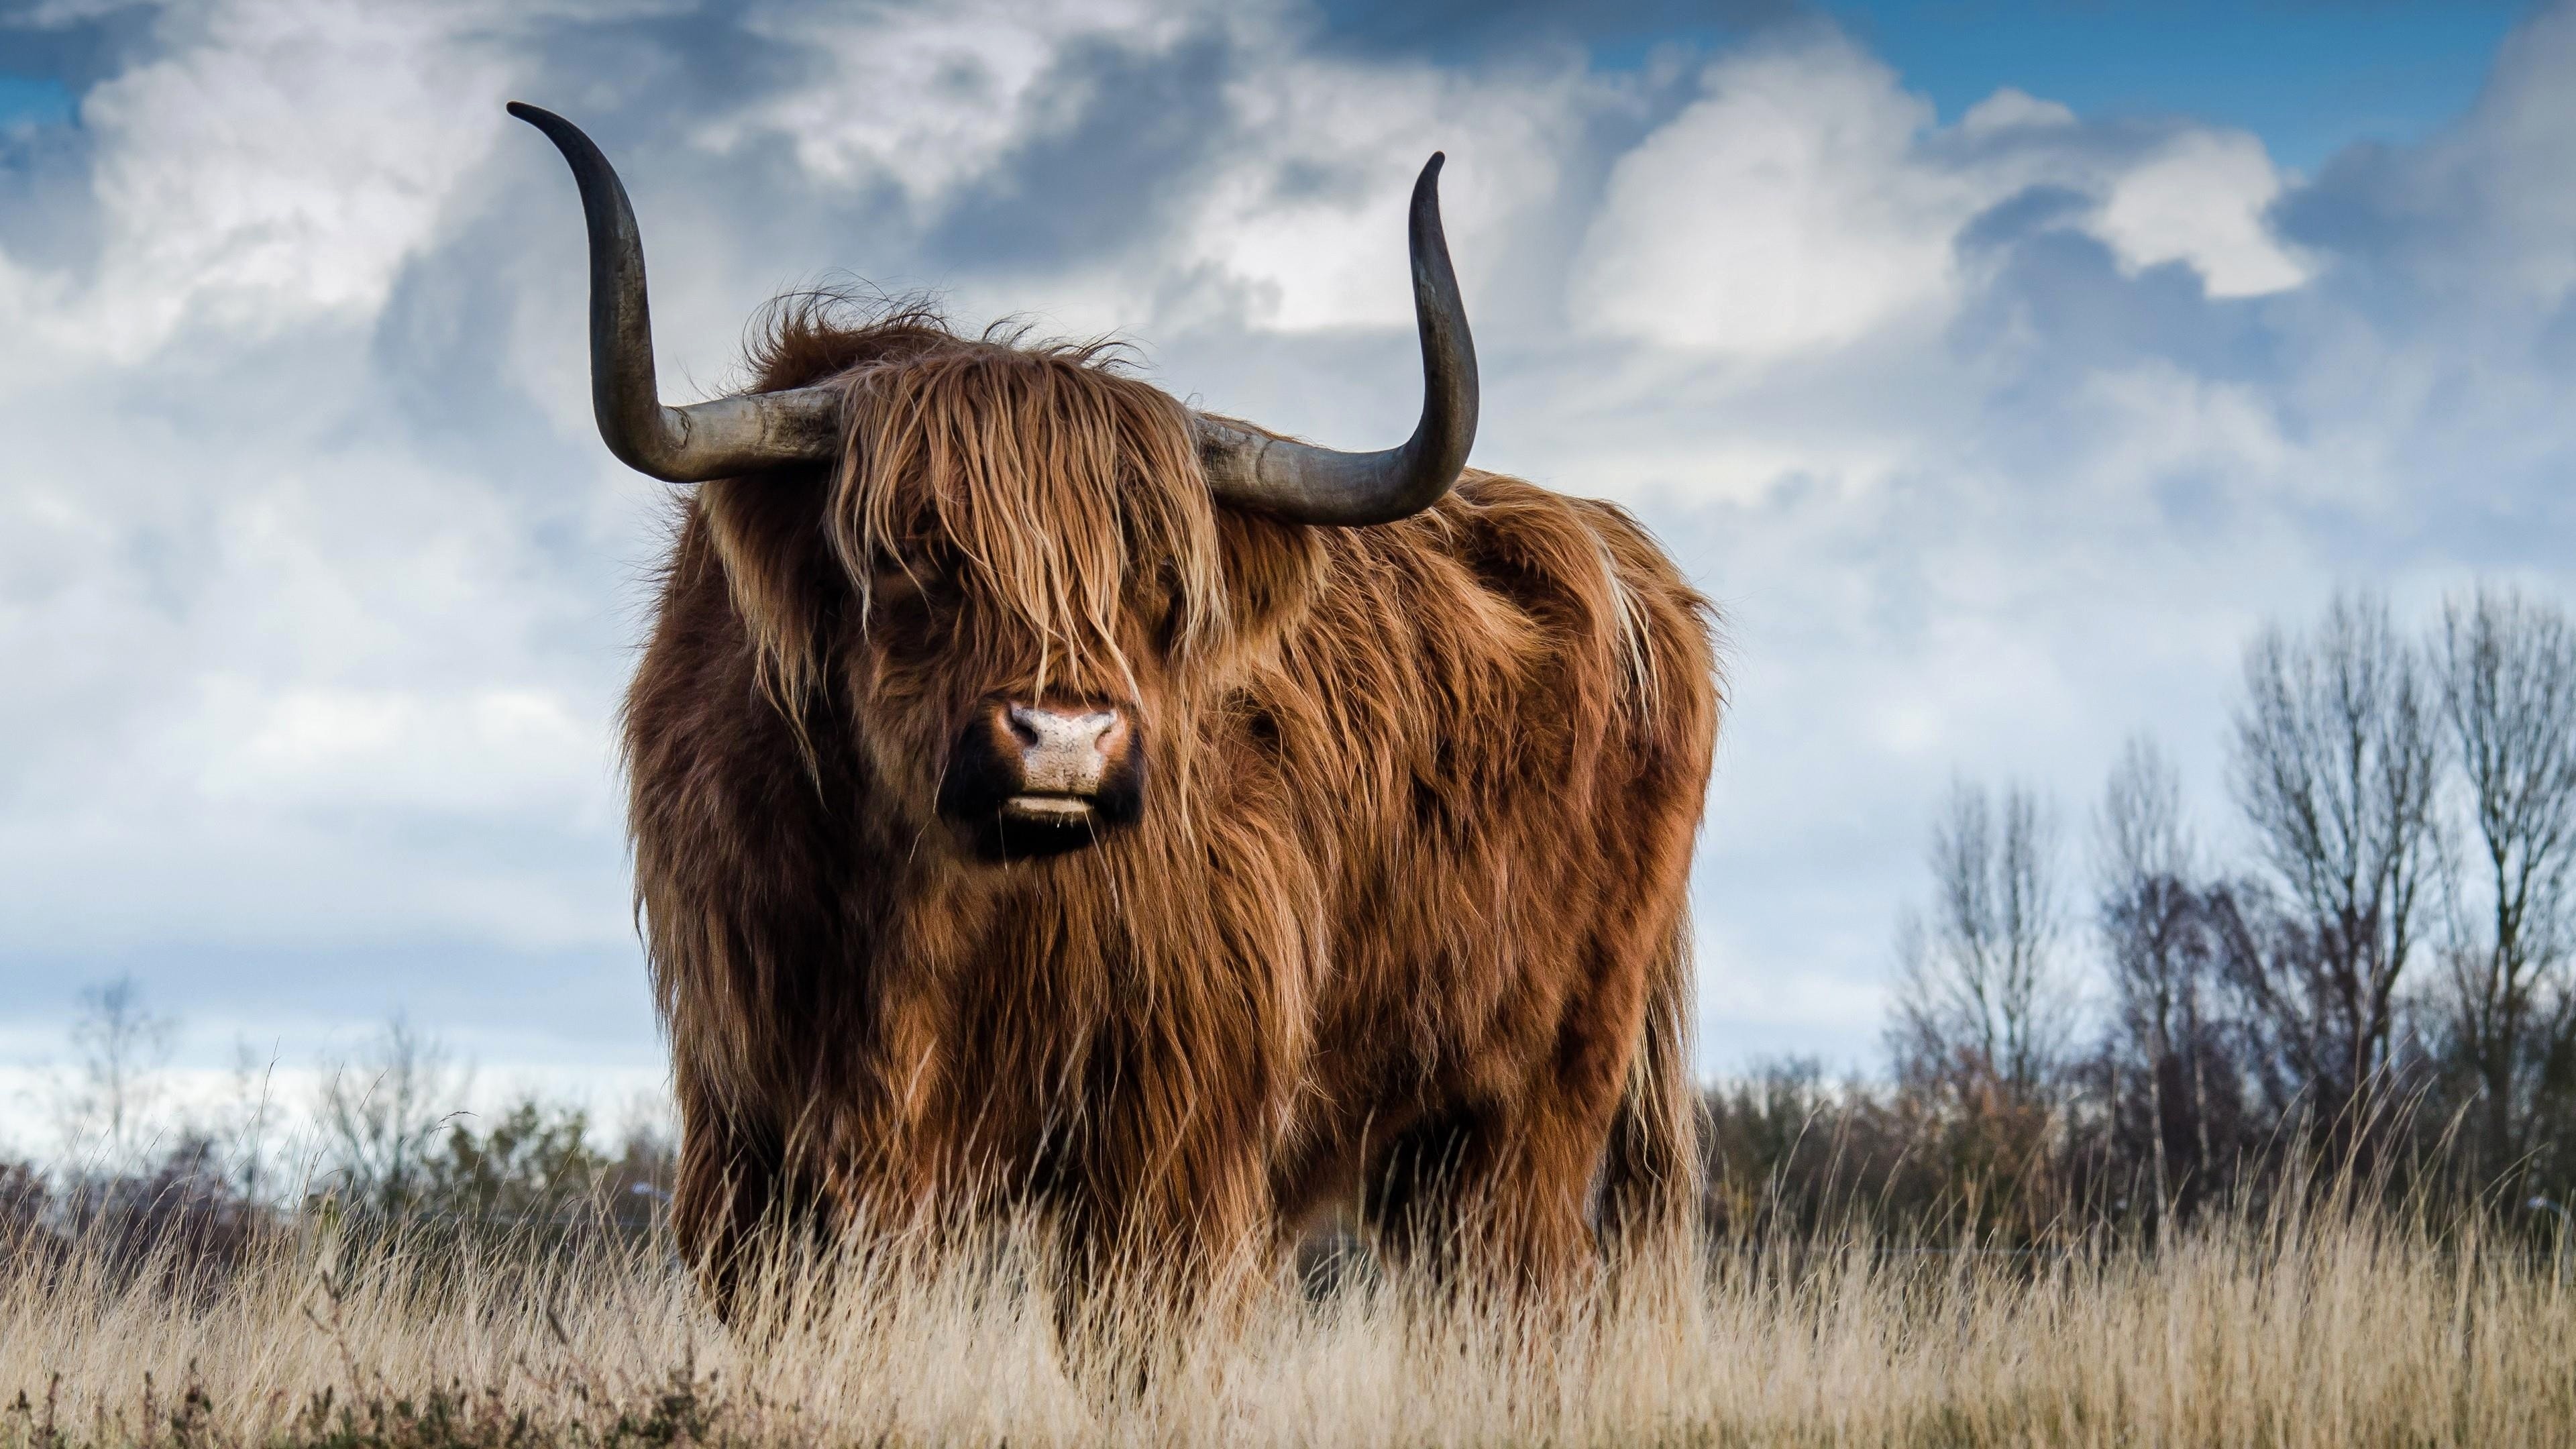 Highland cow wallpapers, Phone and desktop backgrounds, Picturesque highland scenes, Scottish livestock, 3840x2160 4K Desktop